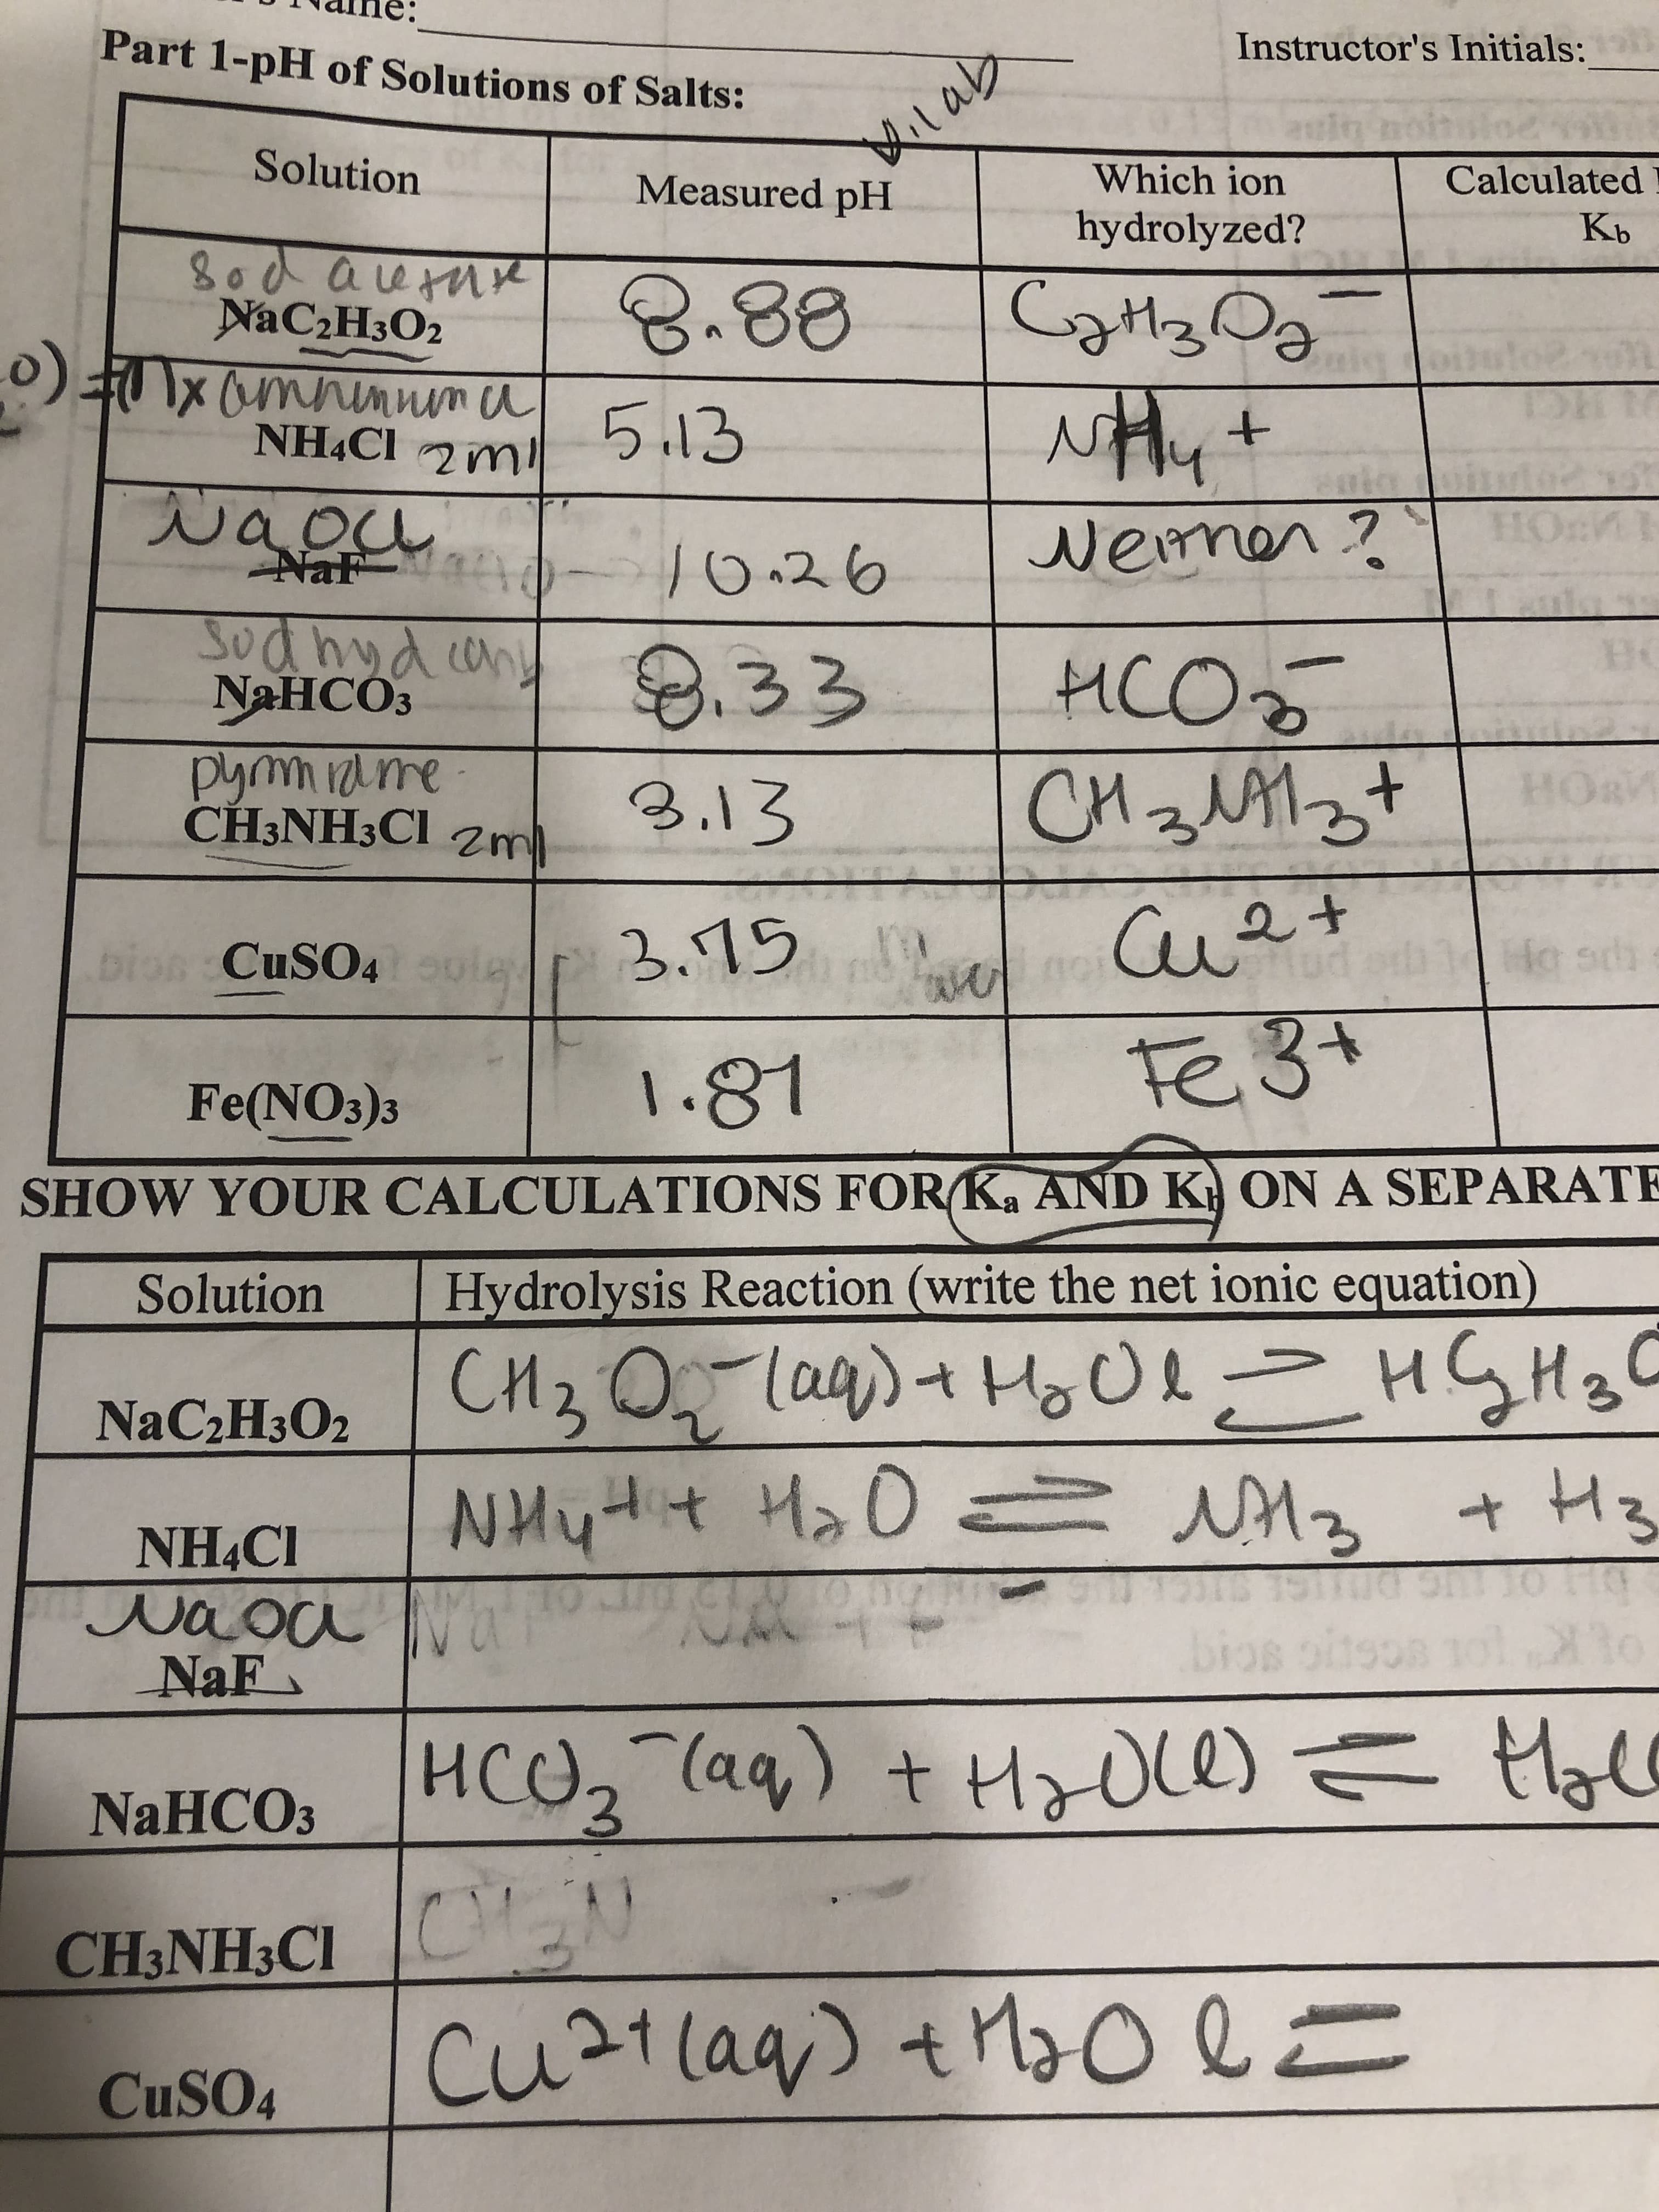 Part 1-pH of Solutions of Salts:
Instructor's Initials:
Klab
Measured pH
Solution
Which ion
Calculated
hydrolyzed?
Кь
8od aetone
NAC2H3O2
o) Tx Omnnnin a
NHẠCI 2 m
8.88
5.13
aou
NaF
wermer?
10.26
Sudnydany
NaHCOз
8.33
3,33
HCO
pymiame
CH3NH3CI zm
CH2M2+
HORV
3.13
3.75
Cuet
bion ule
CUSO4
Ho sch
1.81
Fe 3+
Fe(NO3)3
SHOW YOUR CALCULATIONS FOR K, AND K ON A SEPARATE
Solution
Hydrolysis Reaction (write the net ionic equation)
CH2 O, + HoUl> HGH20
lag)
NaC2H3O2
NHẠC1
bios oitson 1ol
NaF
HCO2 laq) + H>Ole) = Hal
t HaOle) =
Hol
NaHCOз
3.
CH3NH3CI
Cuat(aq) tMaol=
CuSO4
